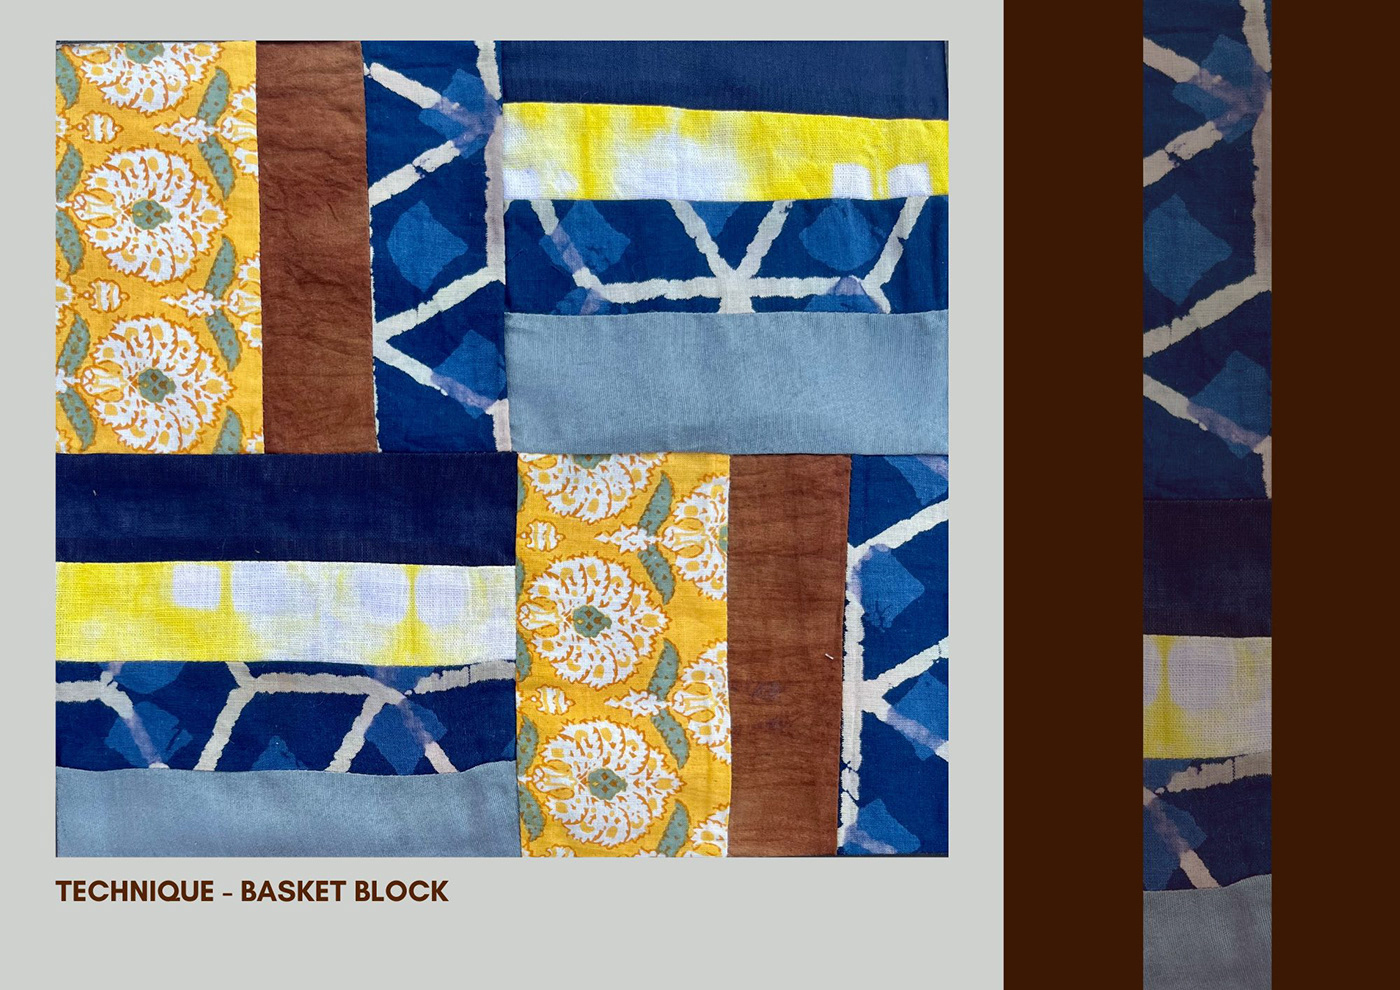 fabric manipulation textile design  Surface Pattern fabric surface design pattern cutting Textiles Embroidery munipulation